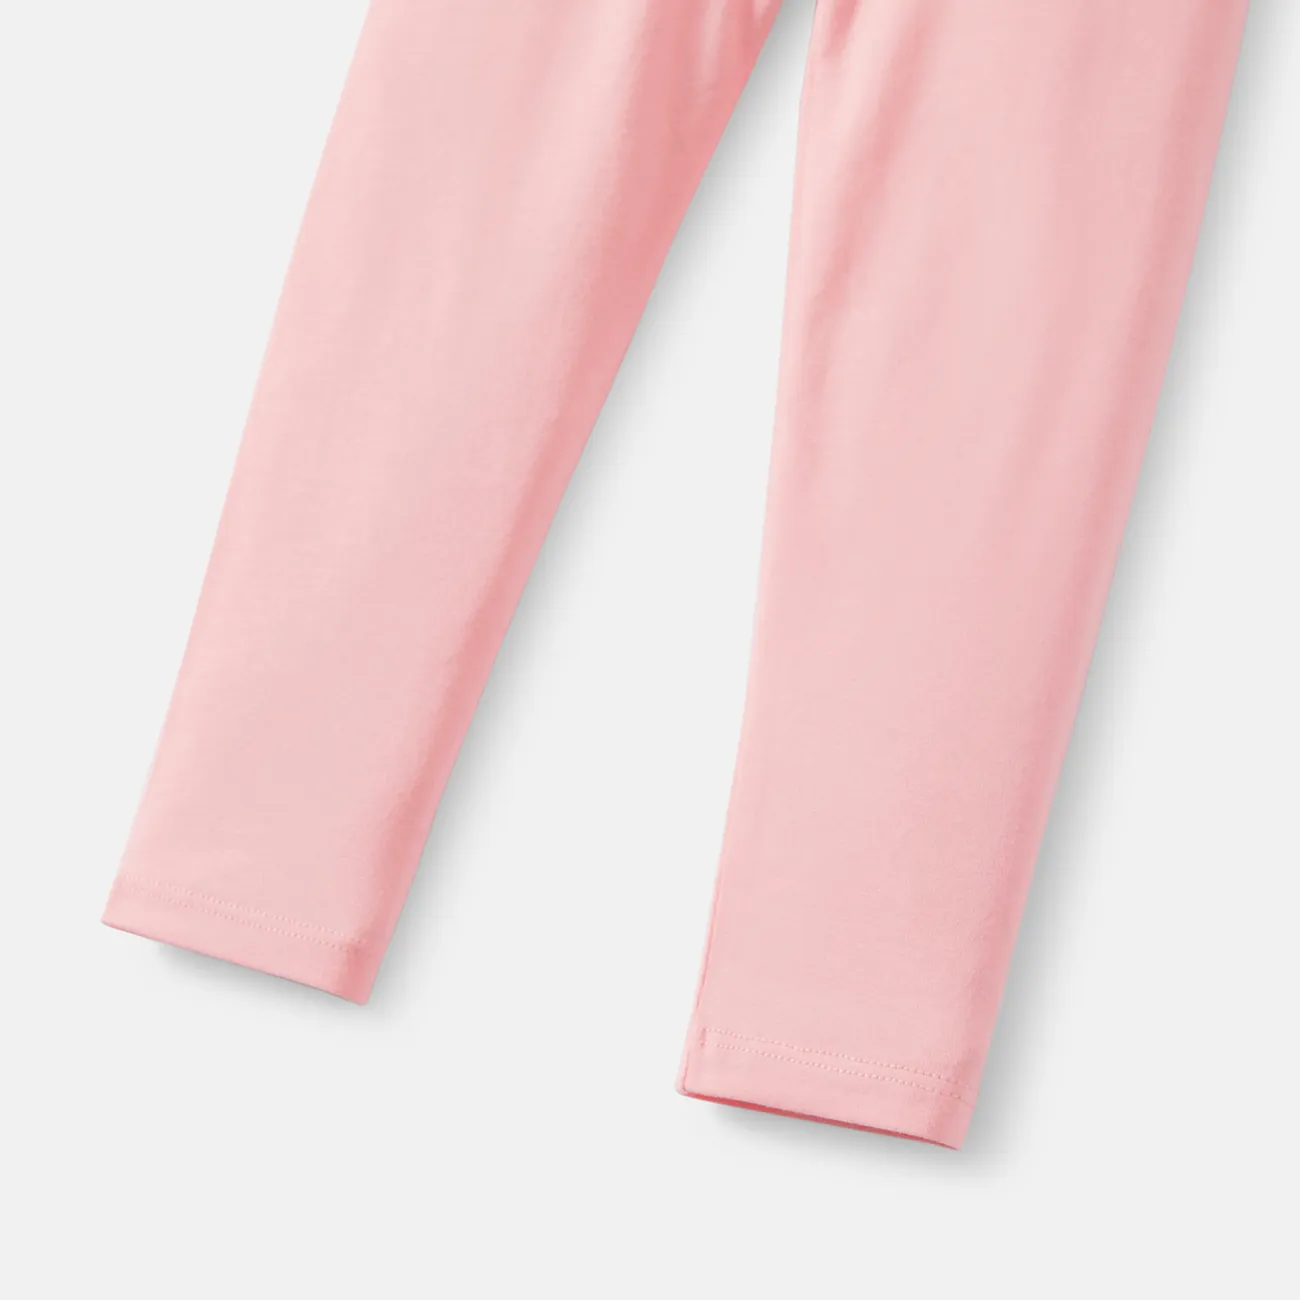 Toddler/Kid Girl Solid Color Elasticized Cotton Leggings Pink big image 1